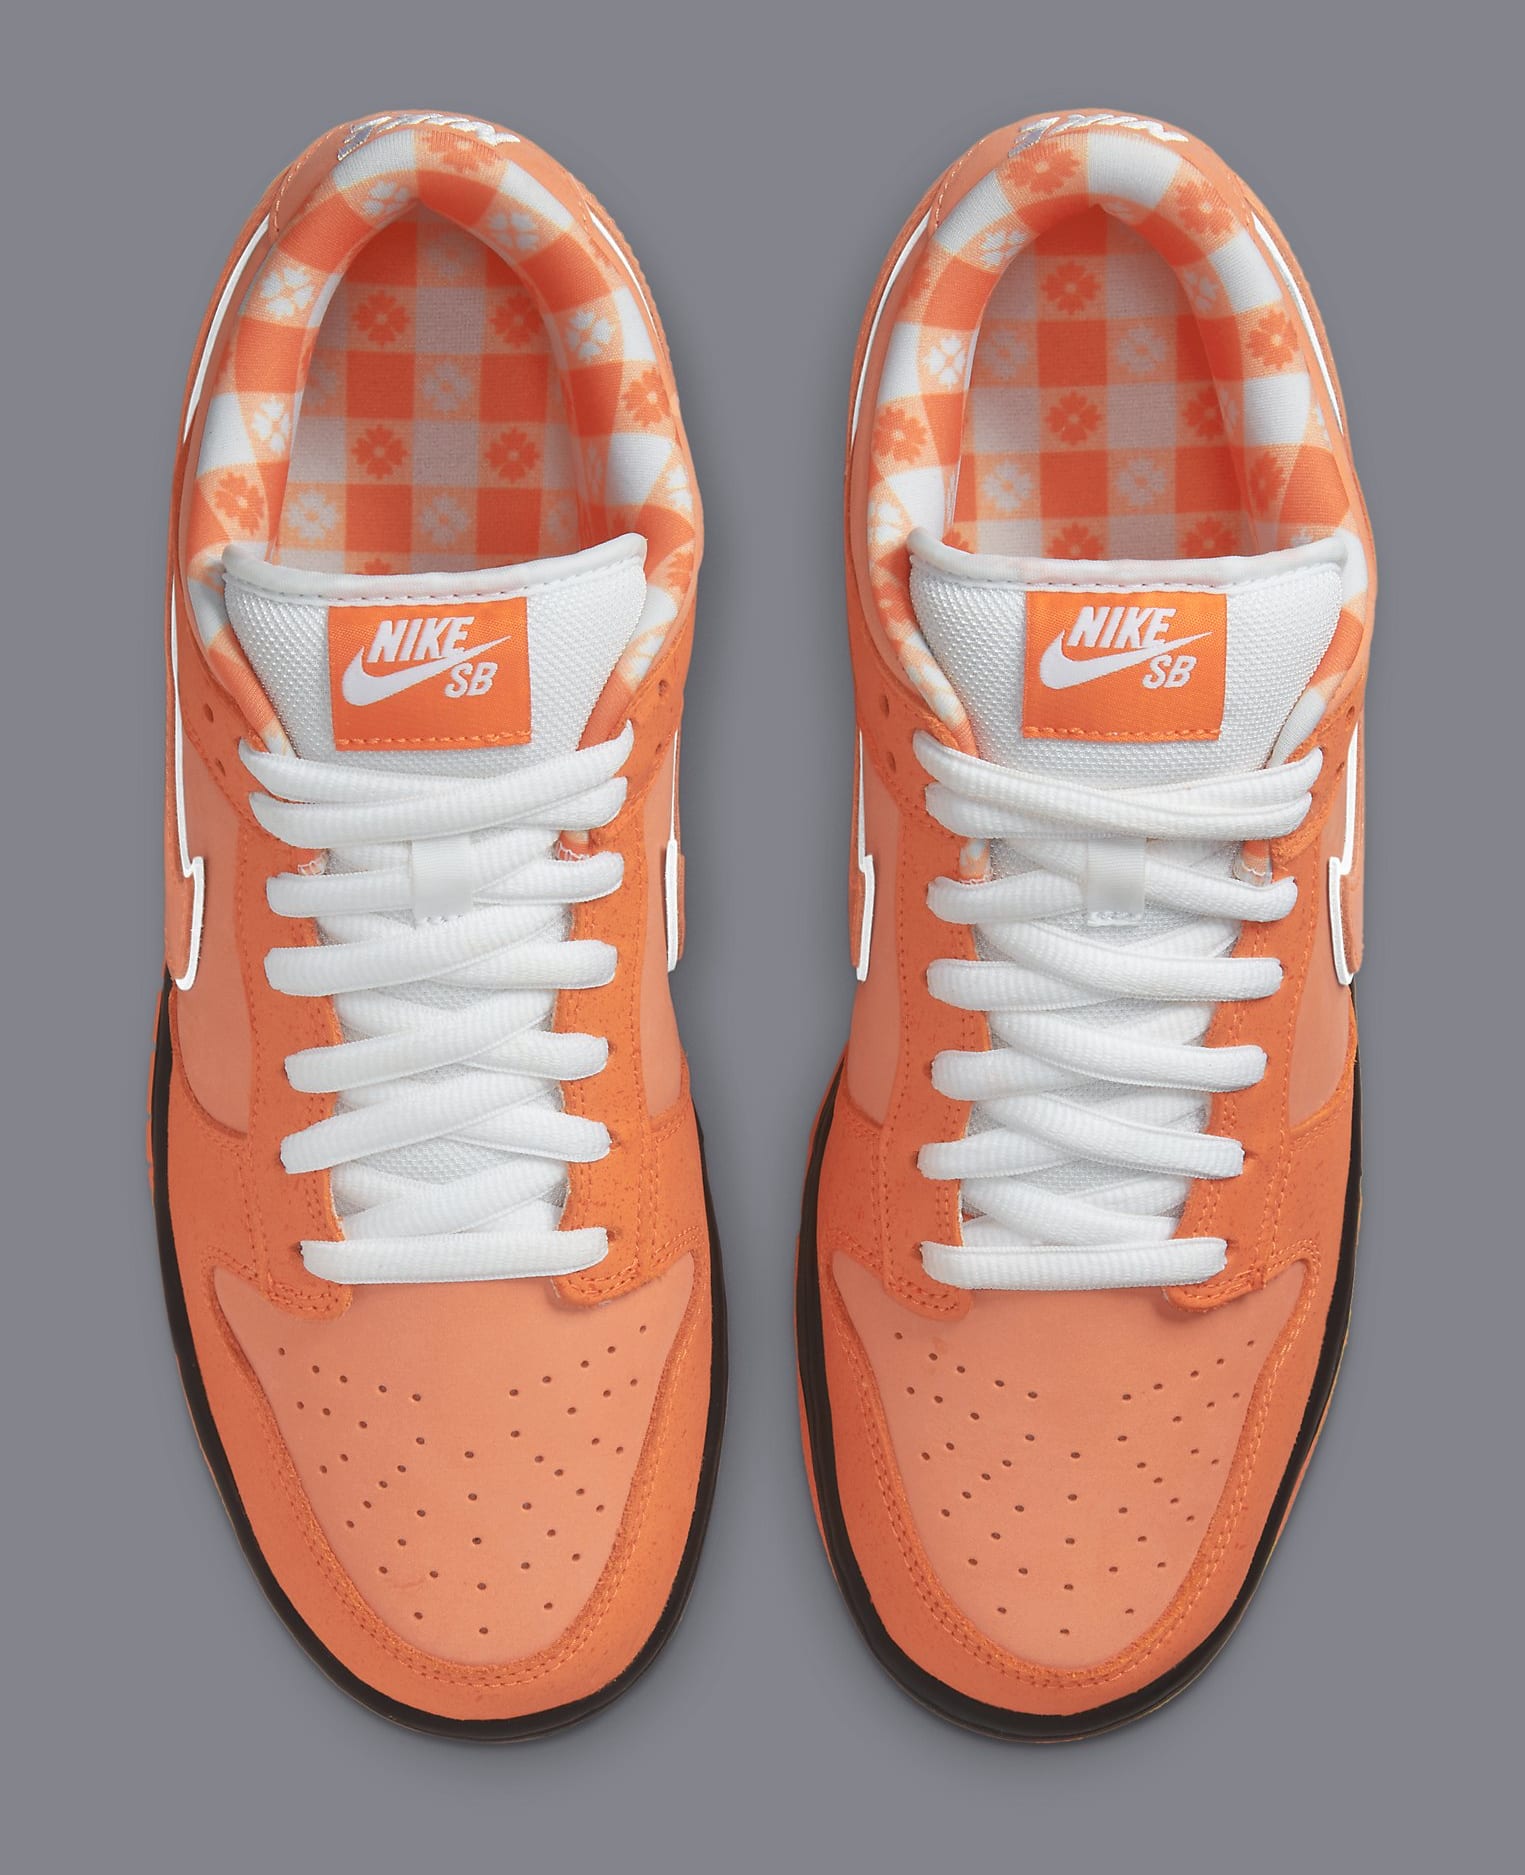 Concepts x Nike SB Dunk Low 'Orange Lobster' FD8776 800 Top